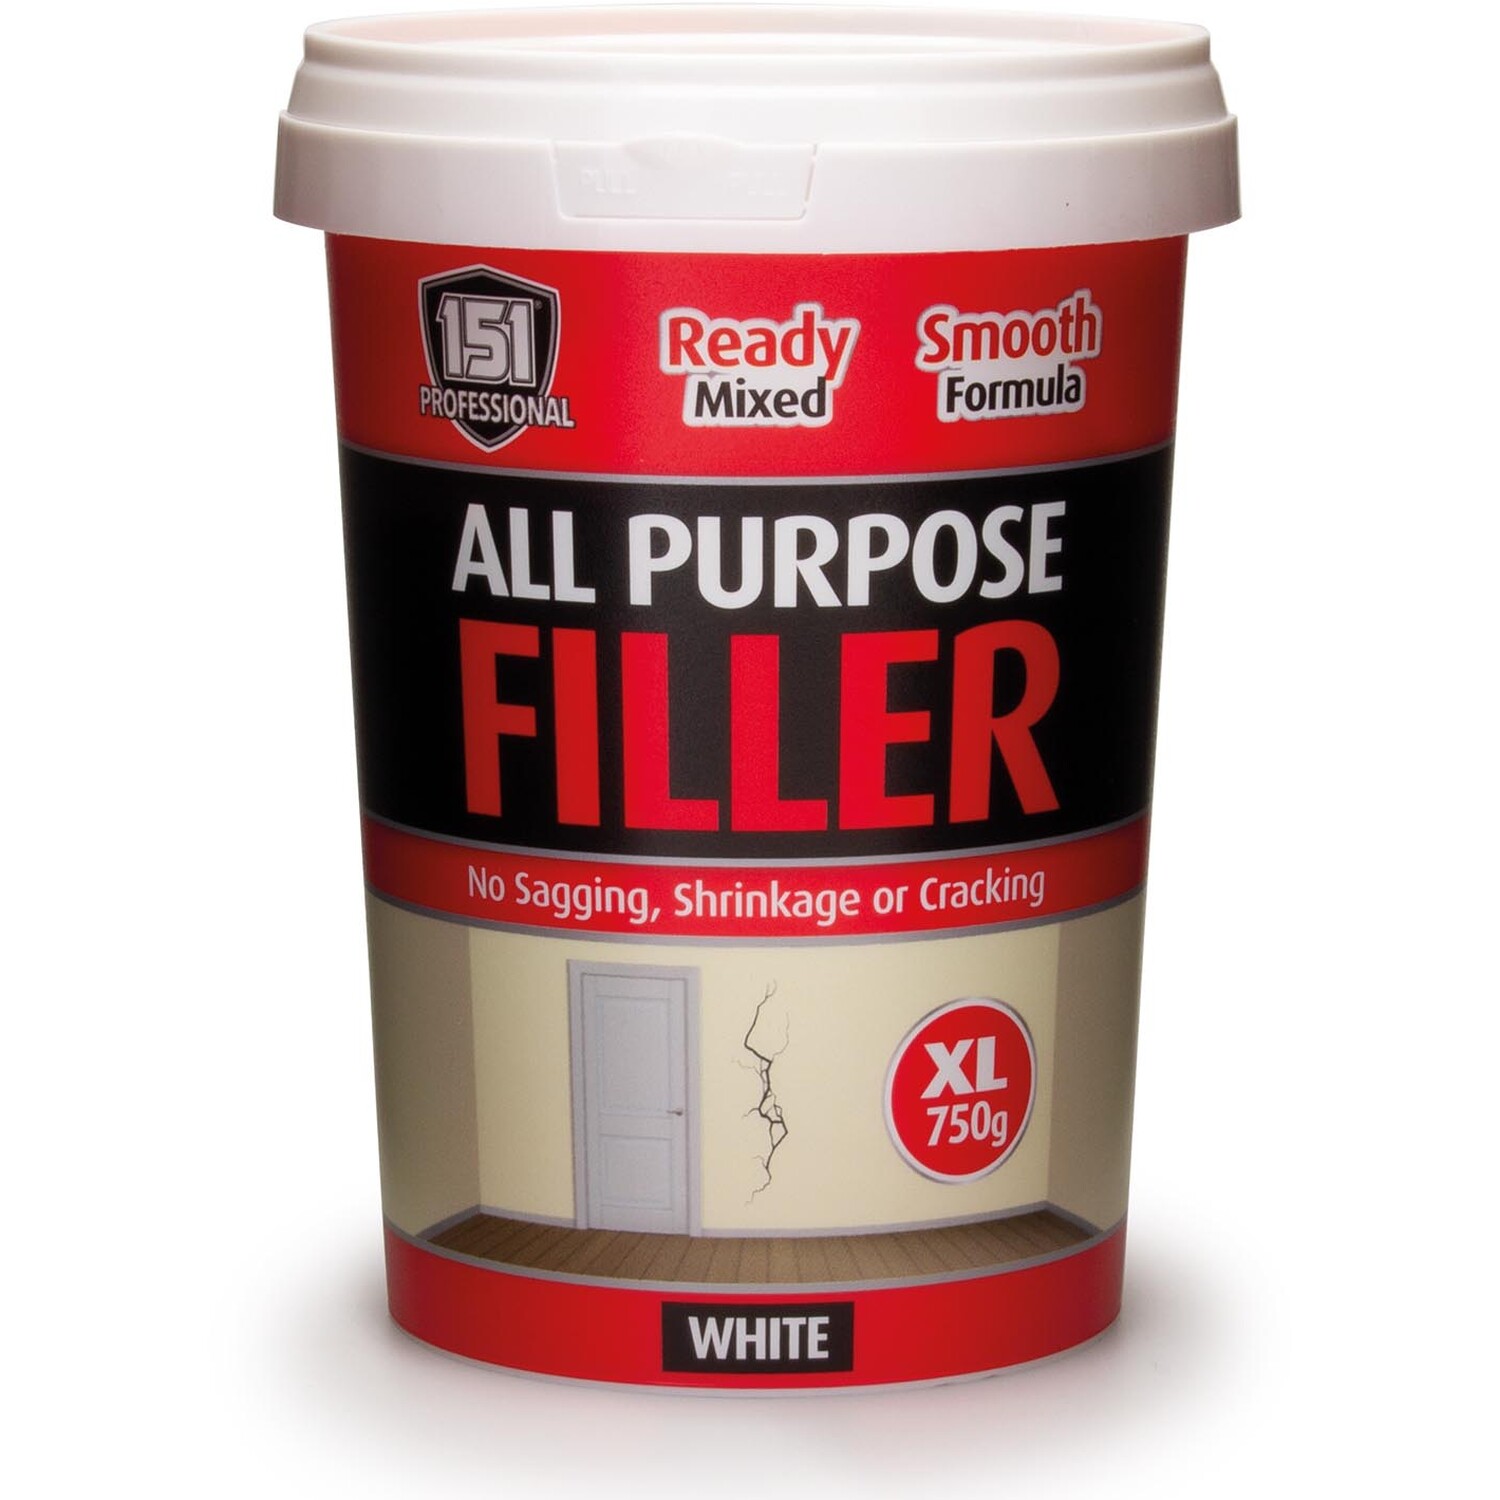 151 Pro All Purpose Filler Tub 750g Image